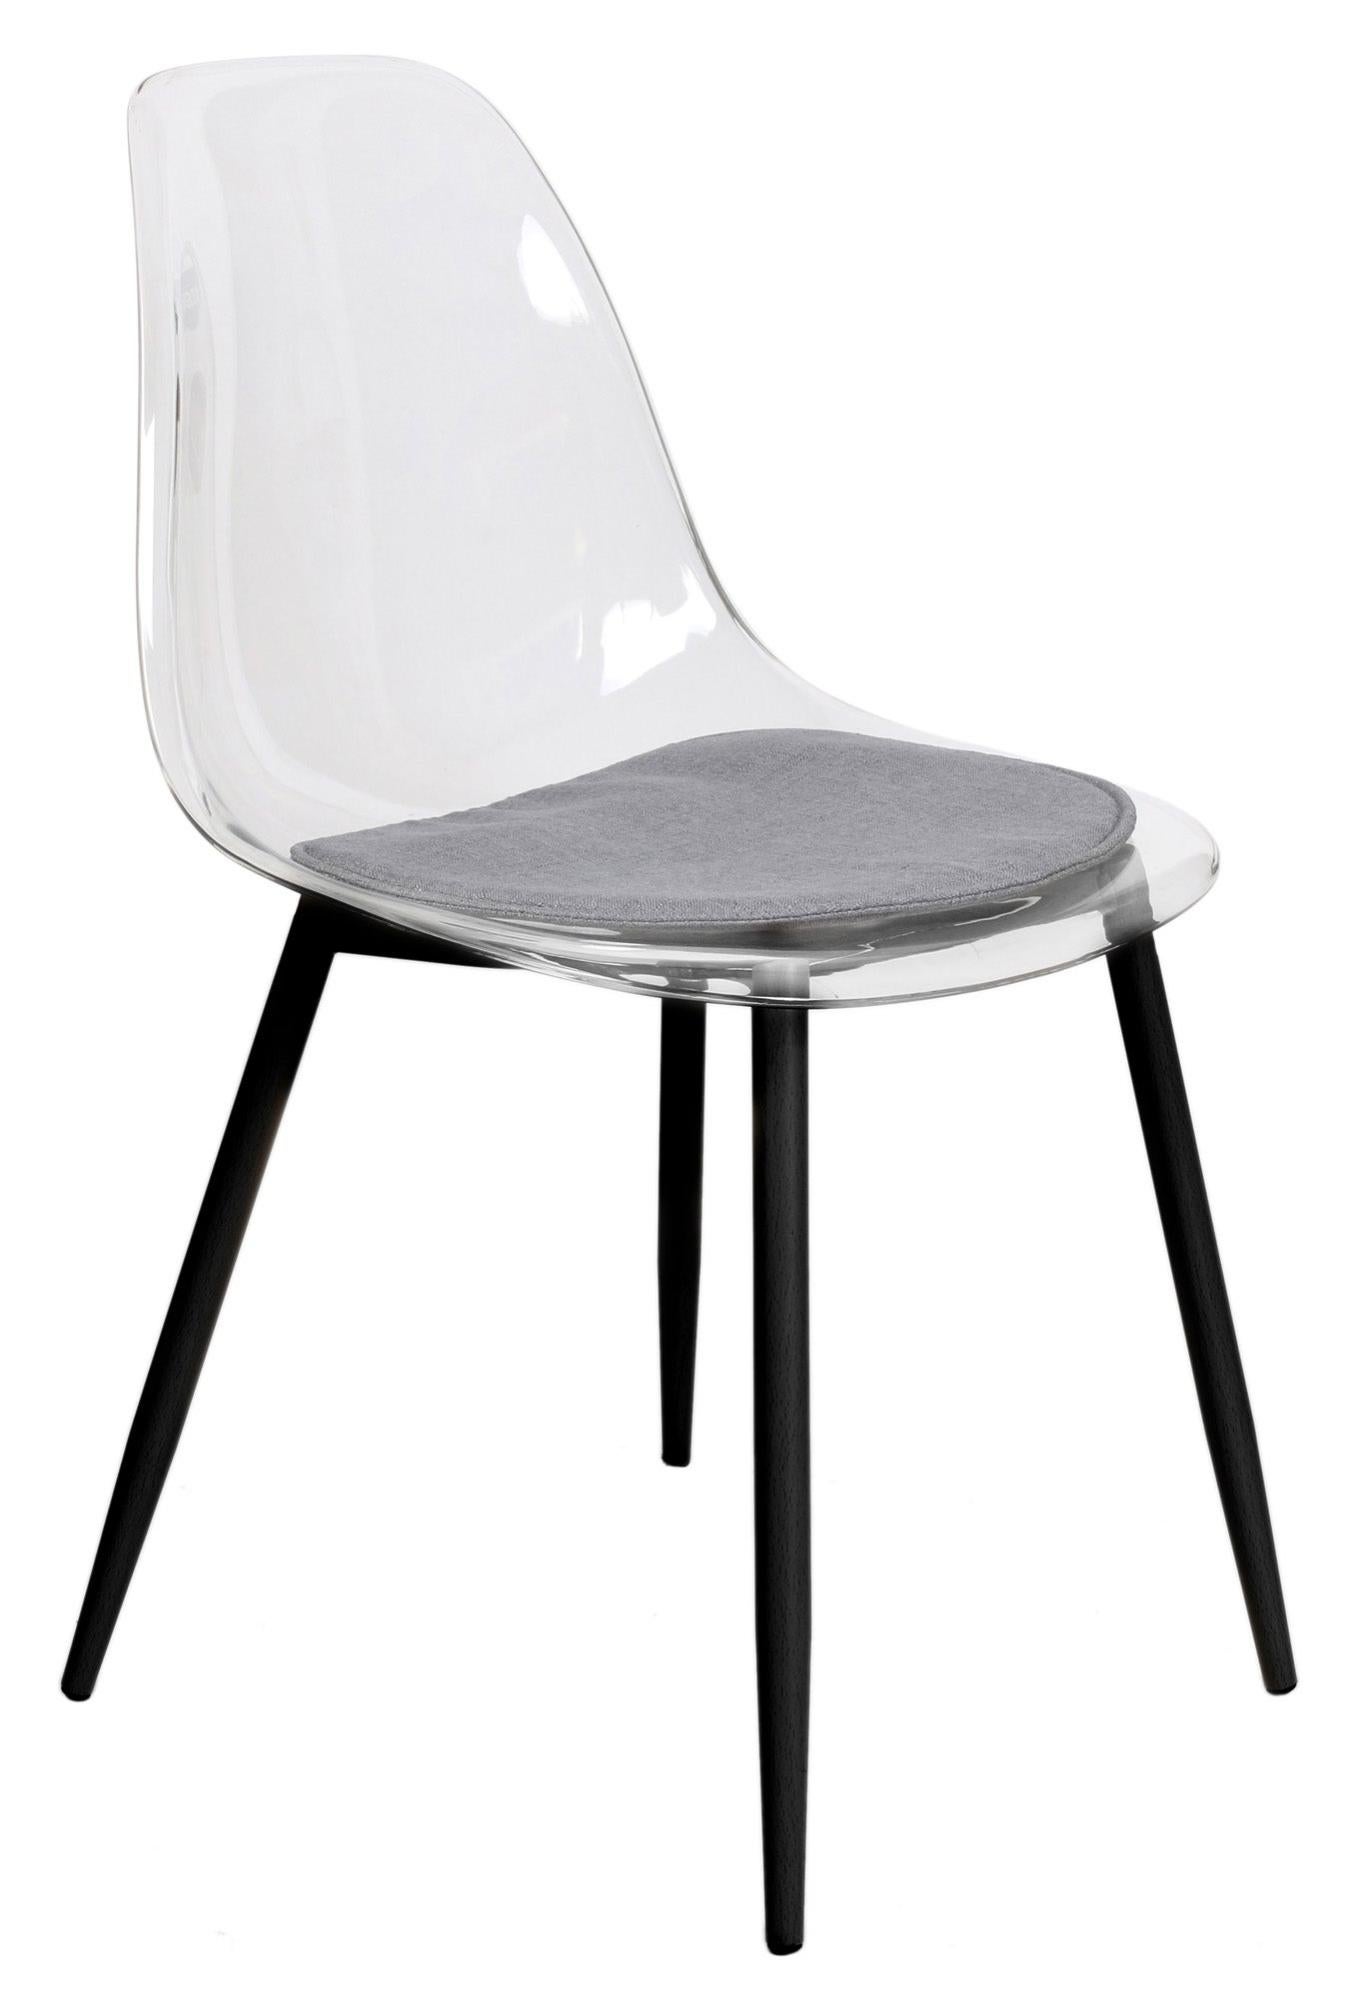 Set de 2 sillas de comedor claire de plástico transparente de 83,9x47x52,2cm